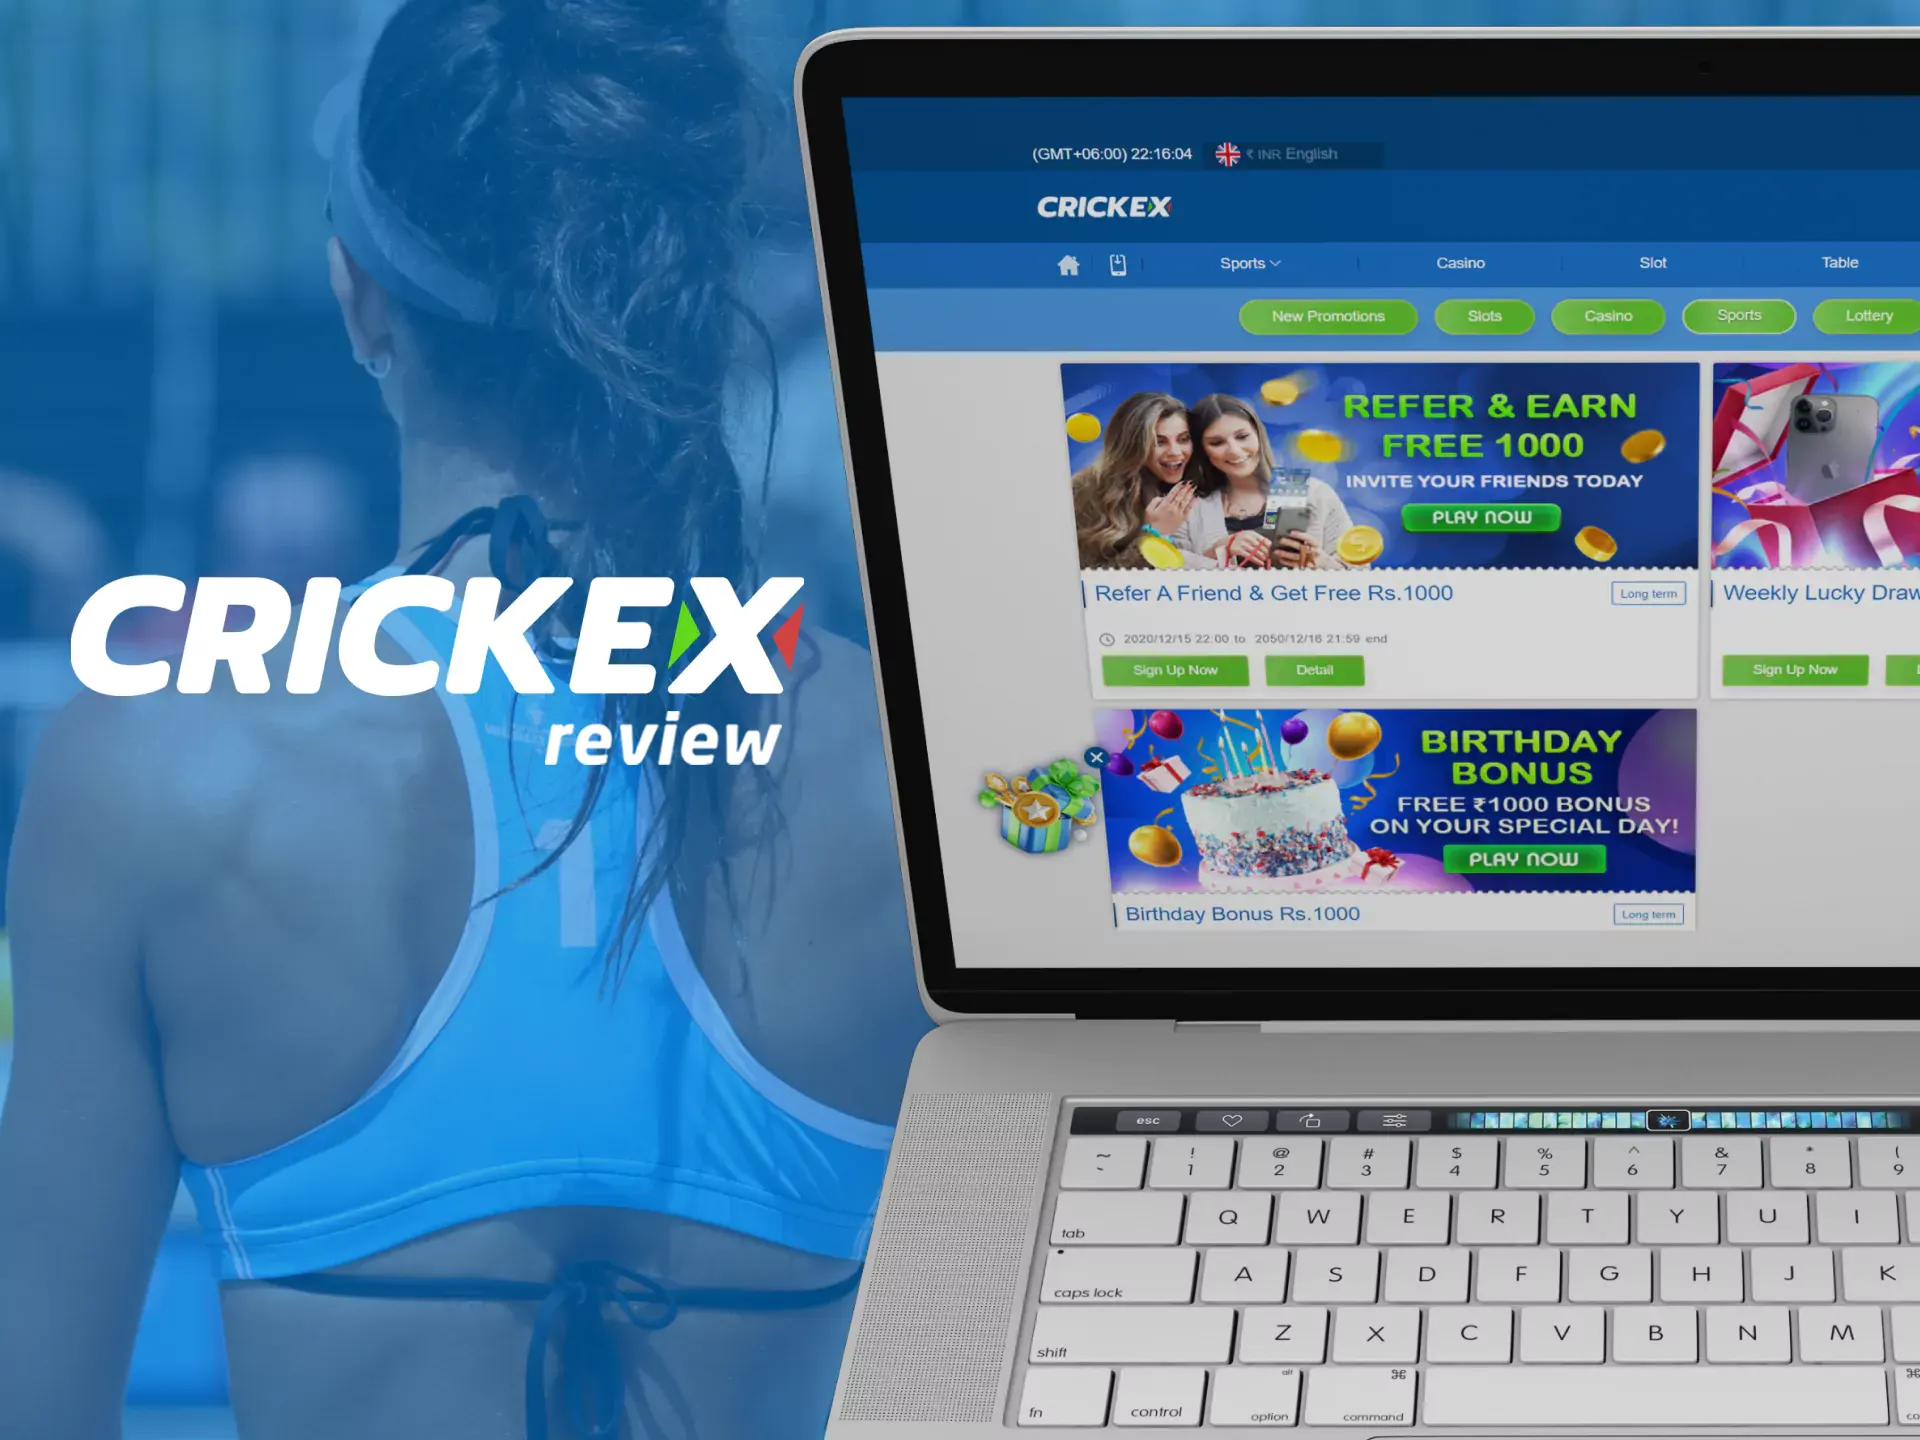 Get various betting bonuses from Crickex.